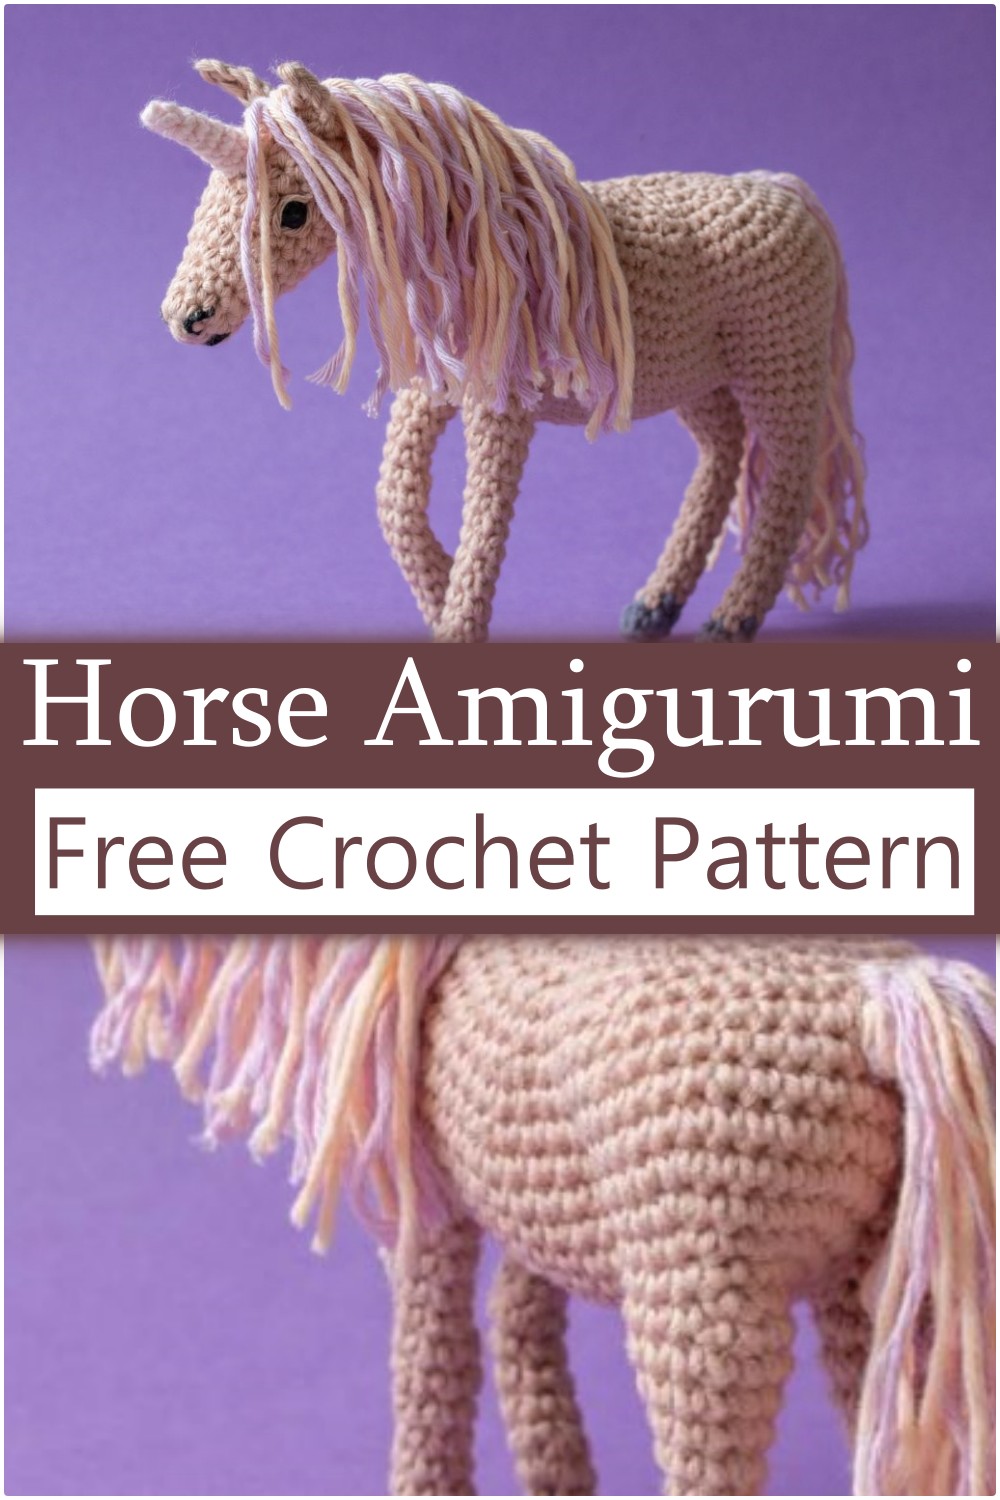 Crochet Horse Amigurumi Tutorial